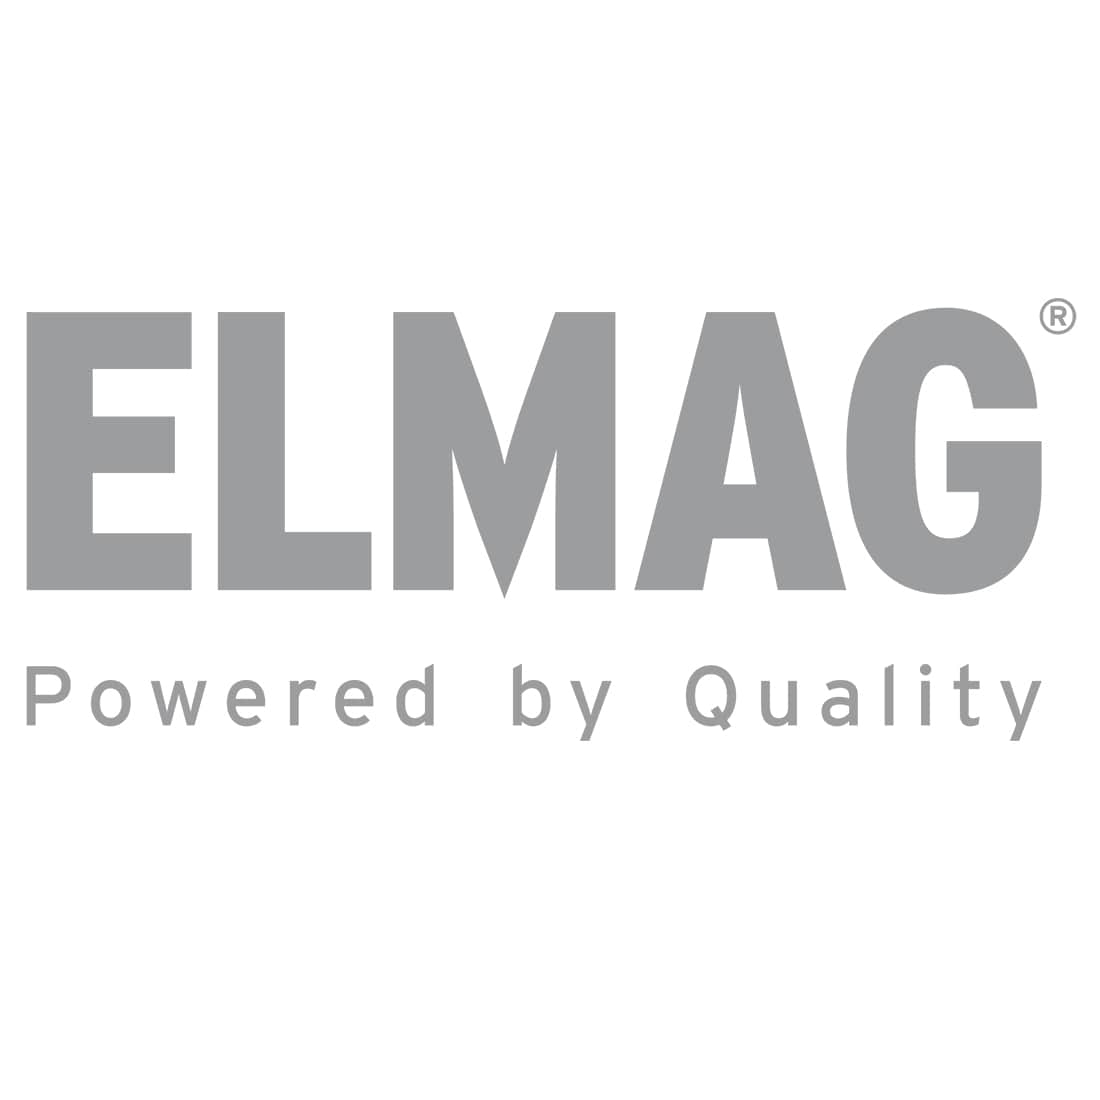 ELMAG Service Centers